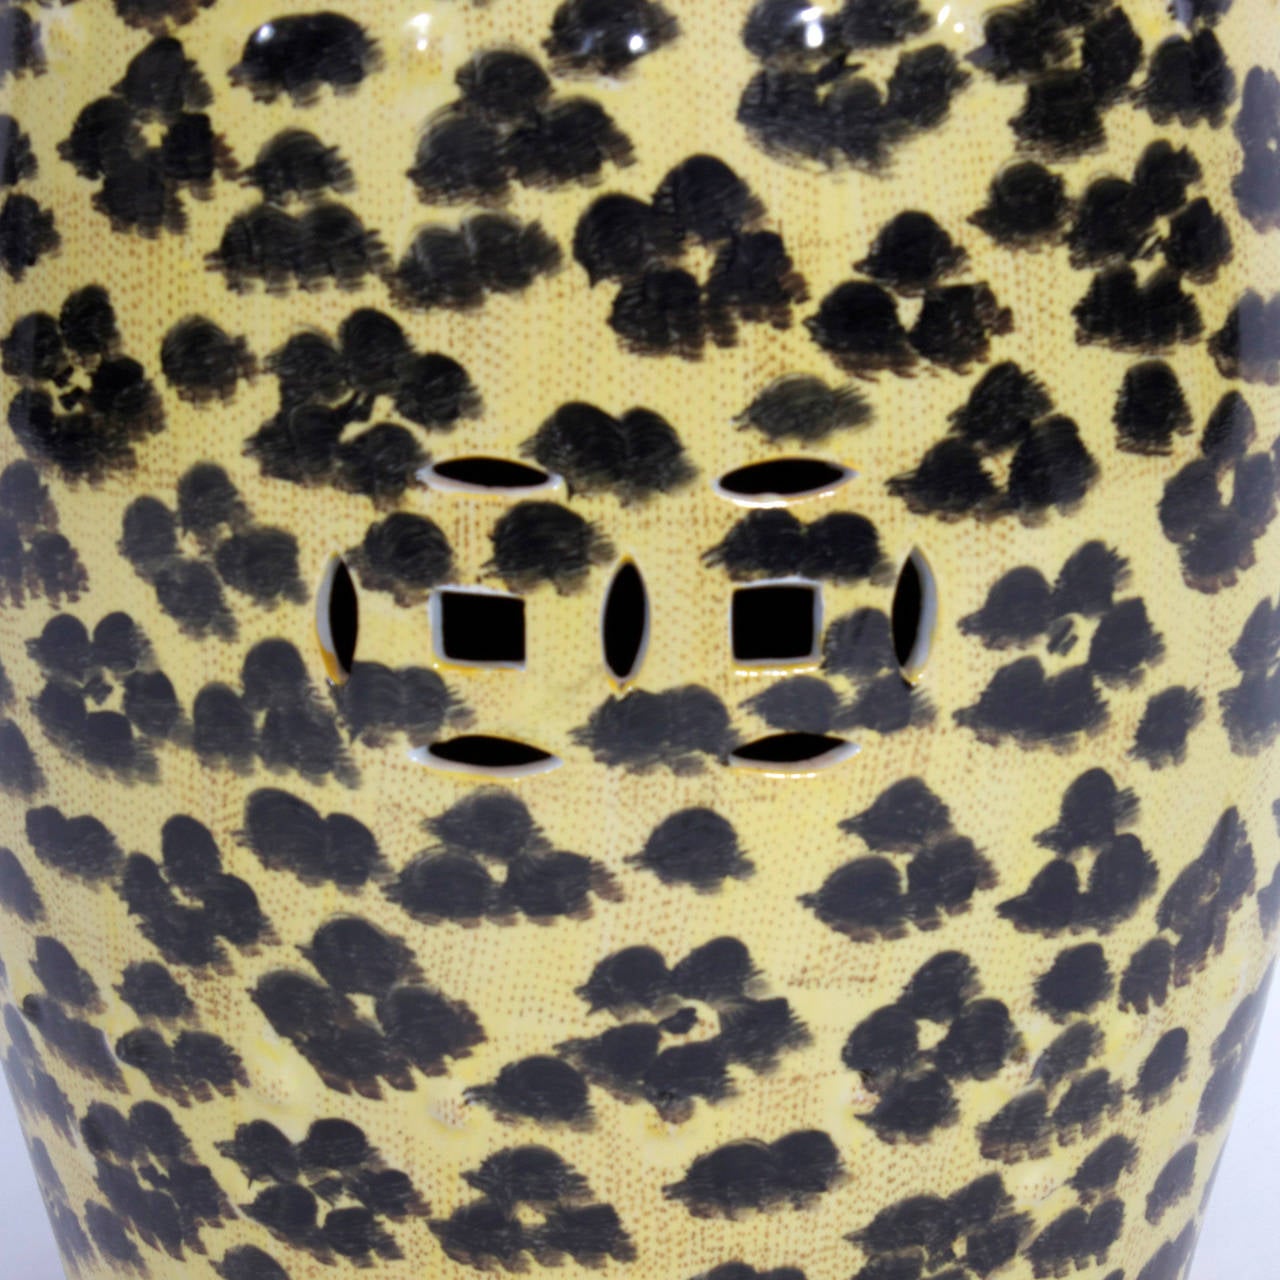 Late 20th Century Stylish Leopard Print Ceramic Garden Seat